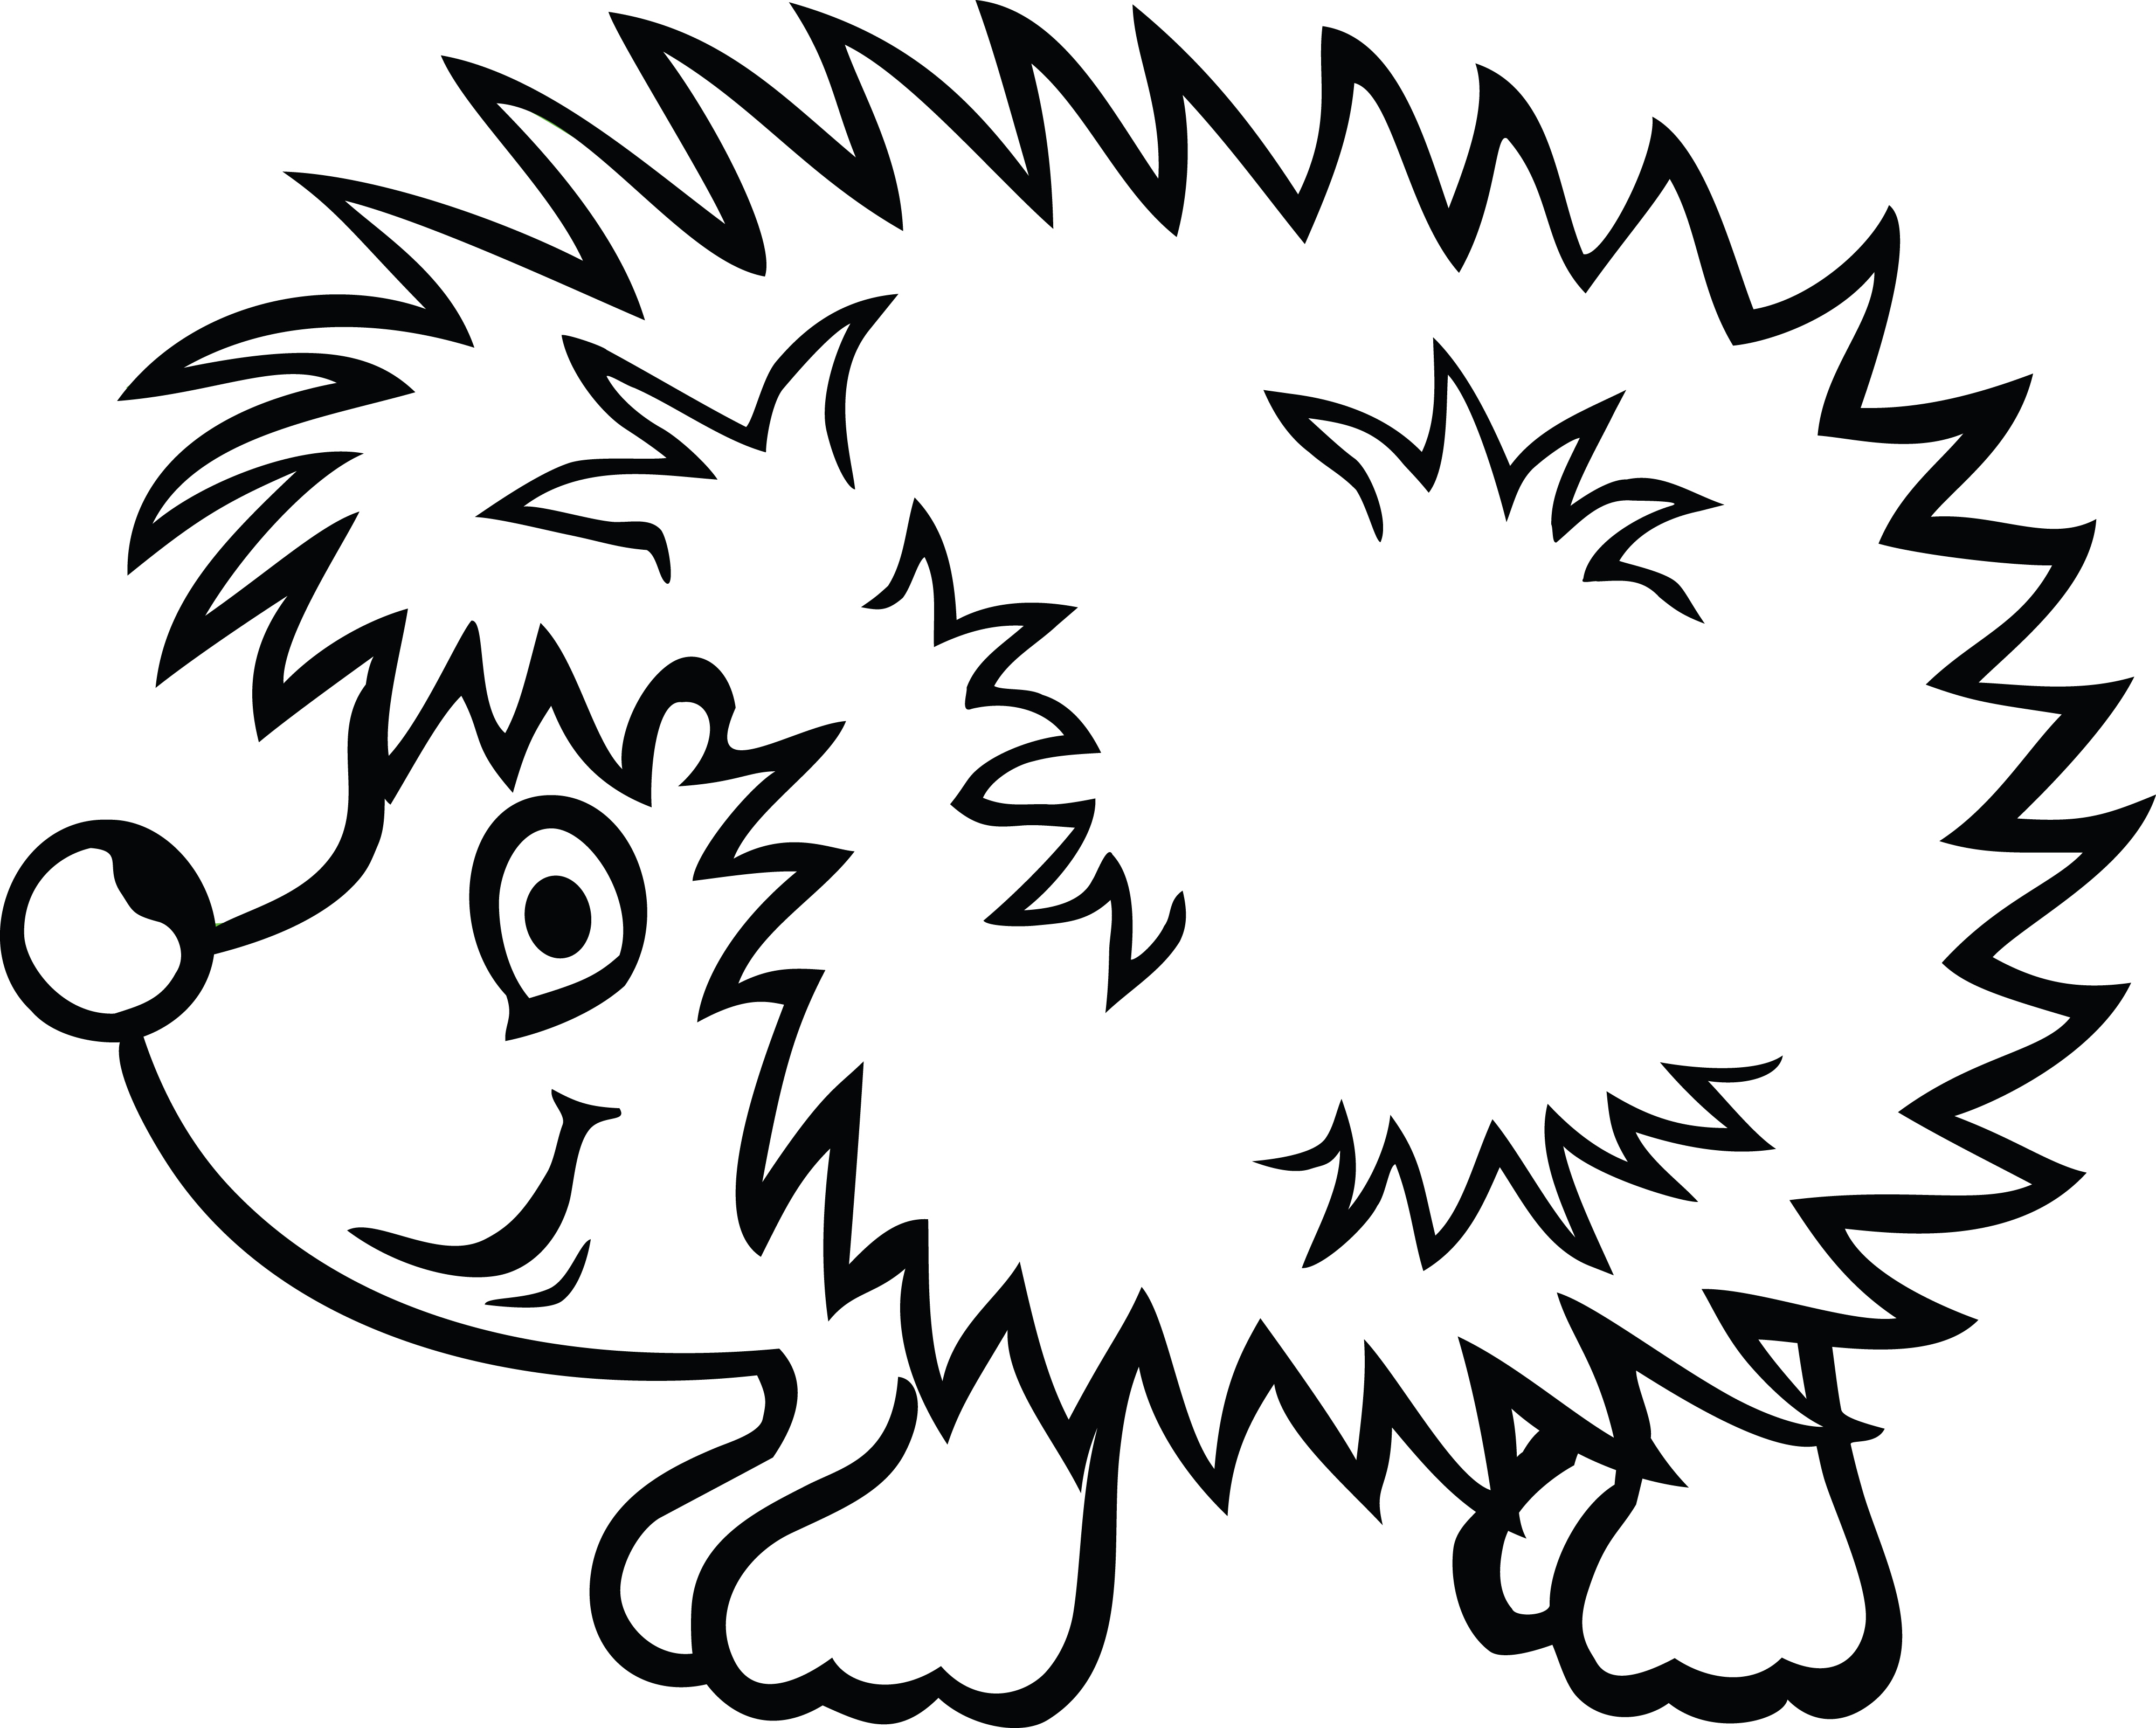 Hedgehog line drawing.